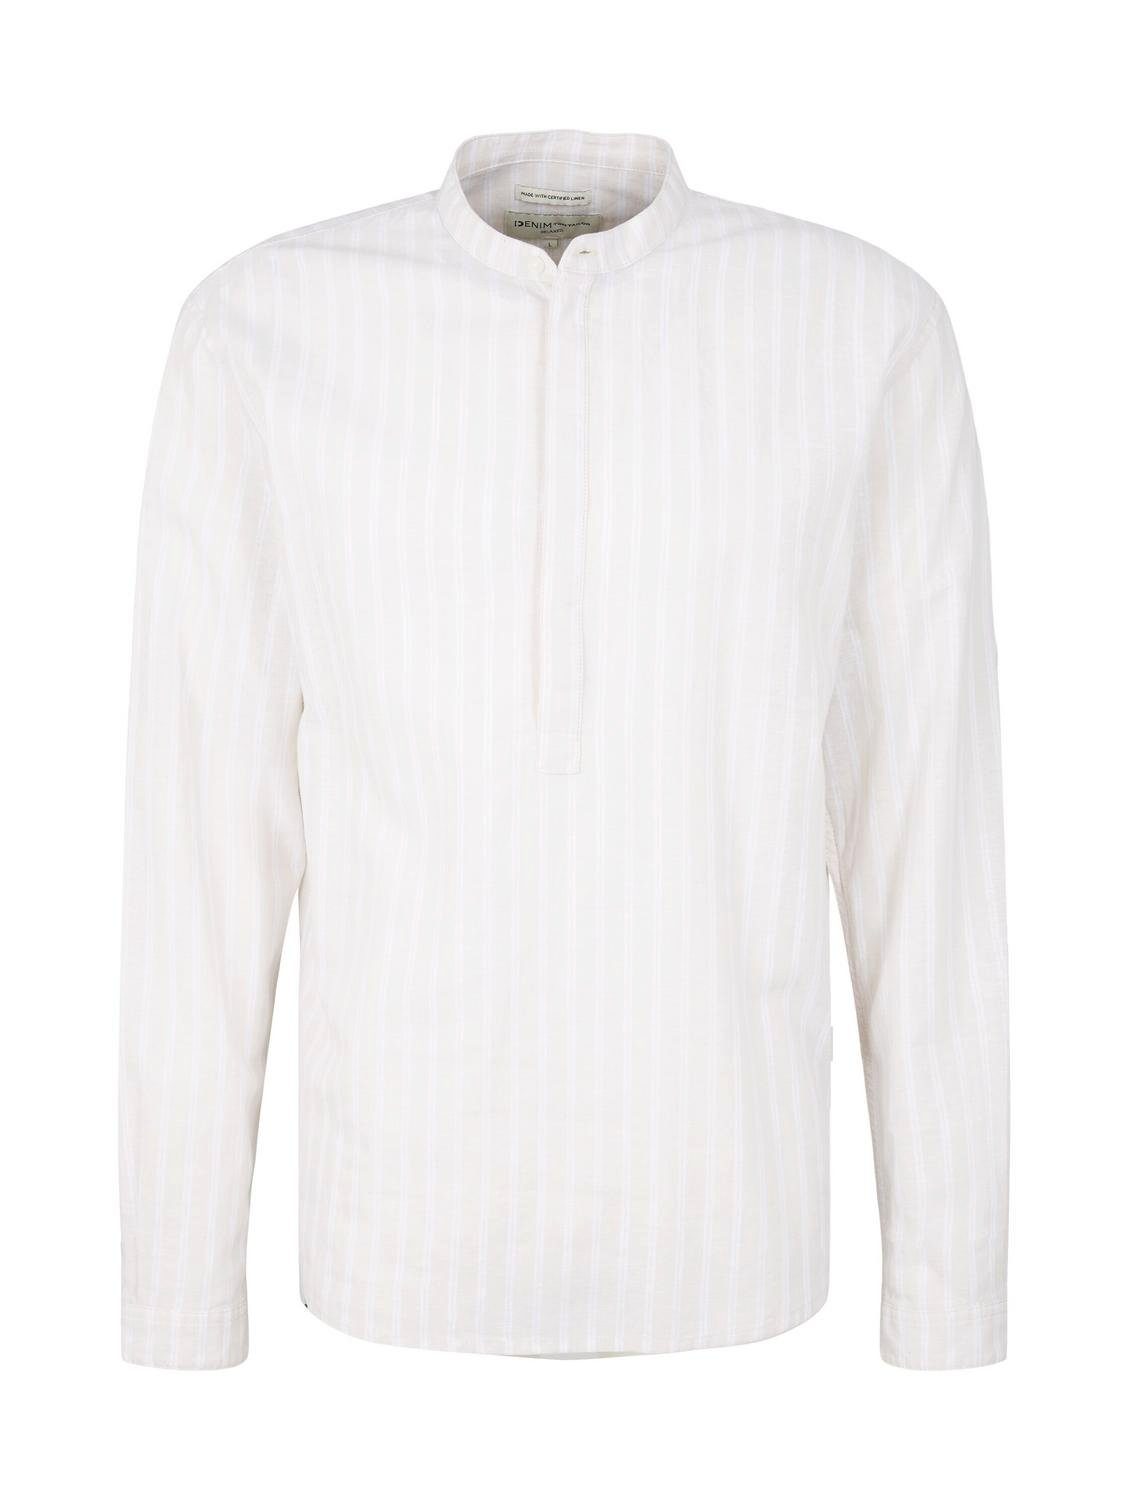 TOM TAILOR Denim T-Shirt relaxed cotton linen tunic